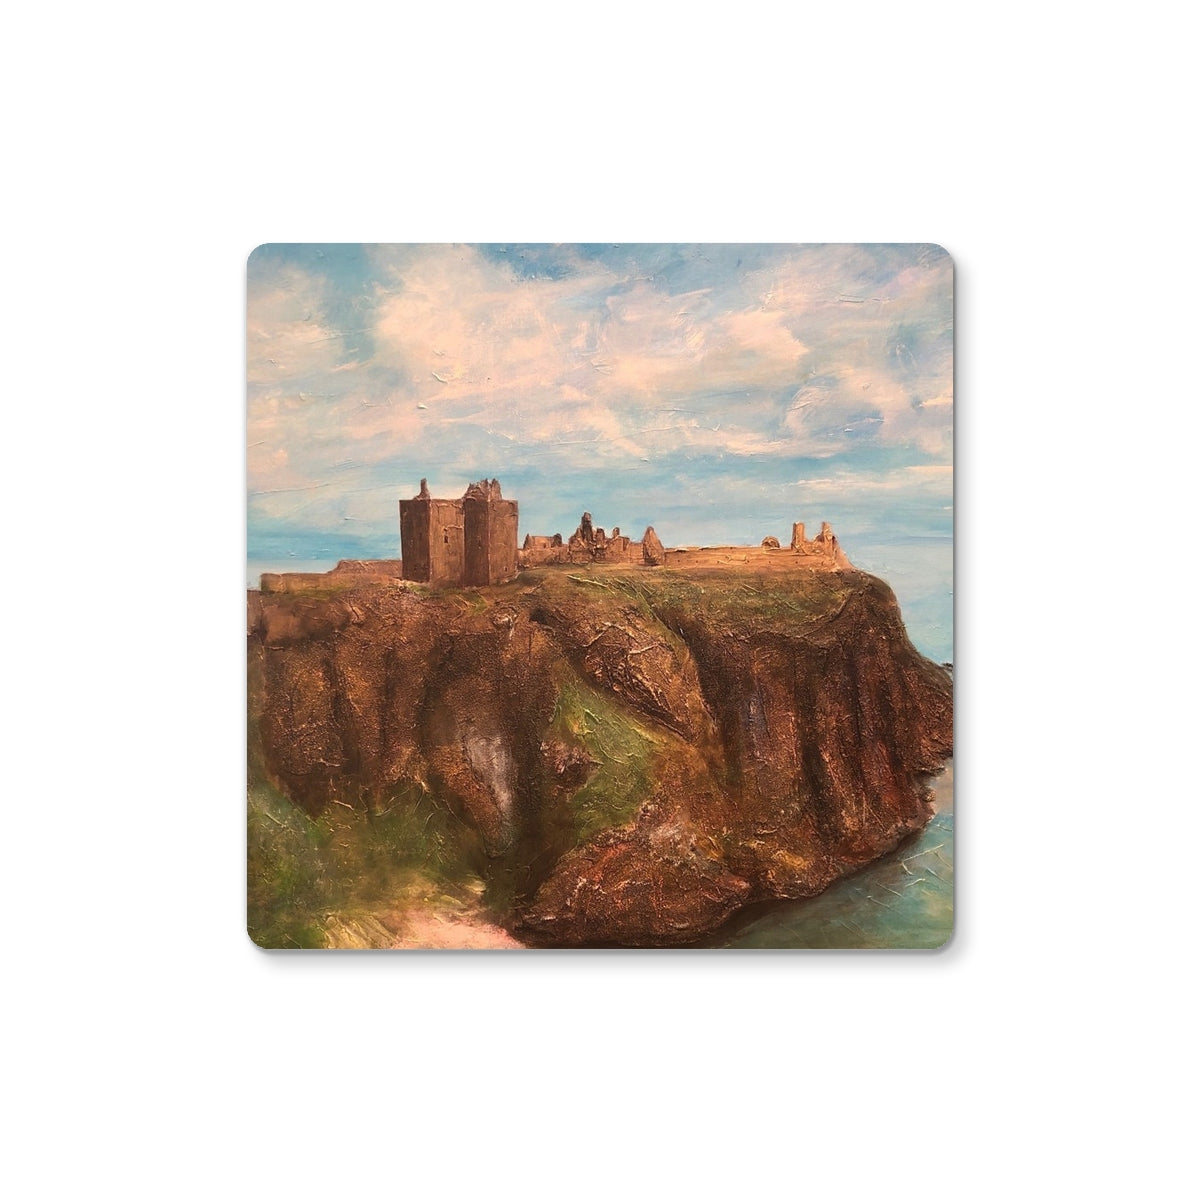 Dunnottar Castle Art Gifts Coaster-Homeware-Prodigi-4 Coasters-Paintings, Prints, Homeware, Art Gifts From Scotland By Scottish Artist Kevin Hunter